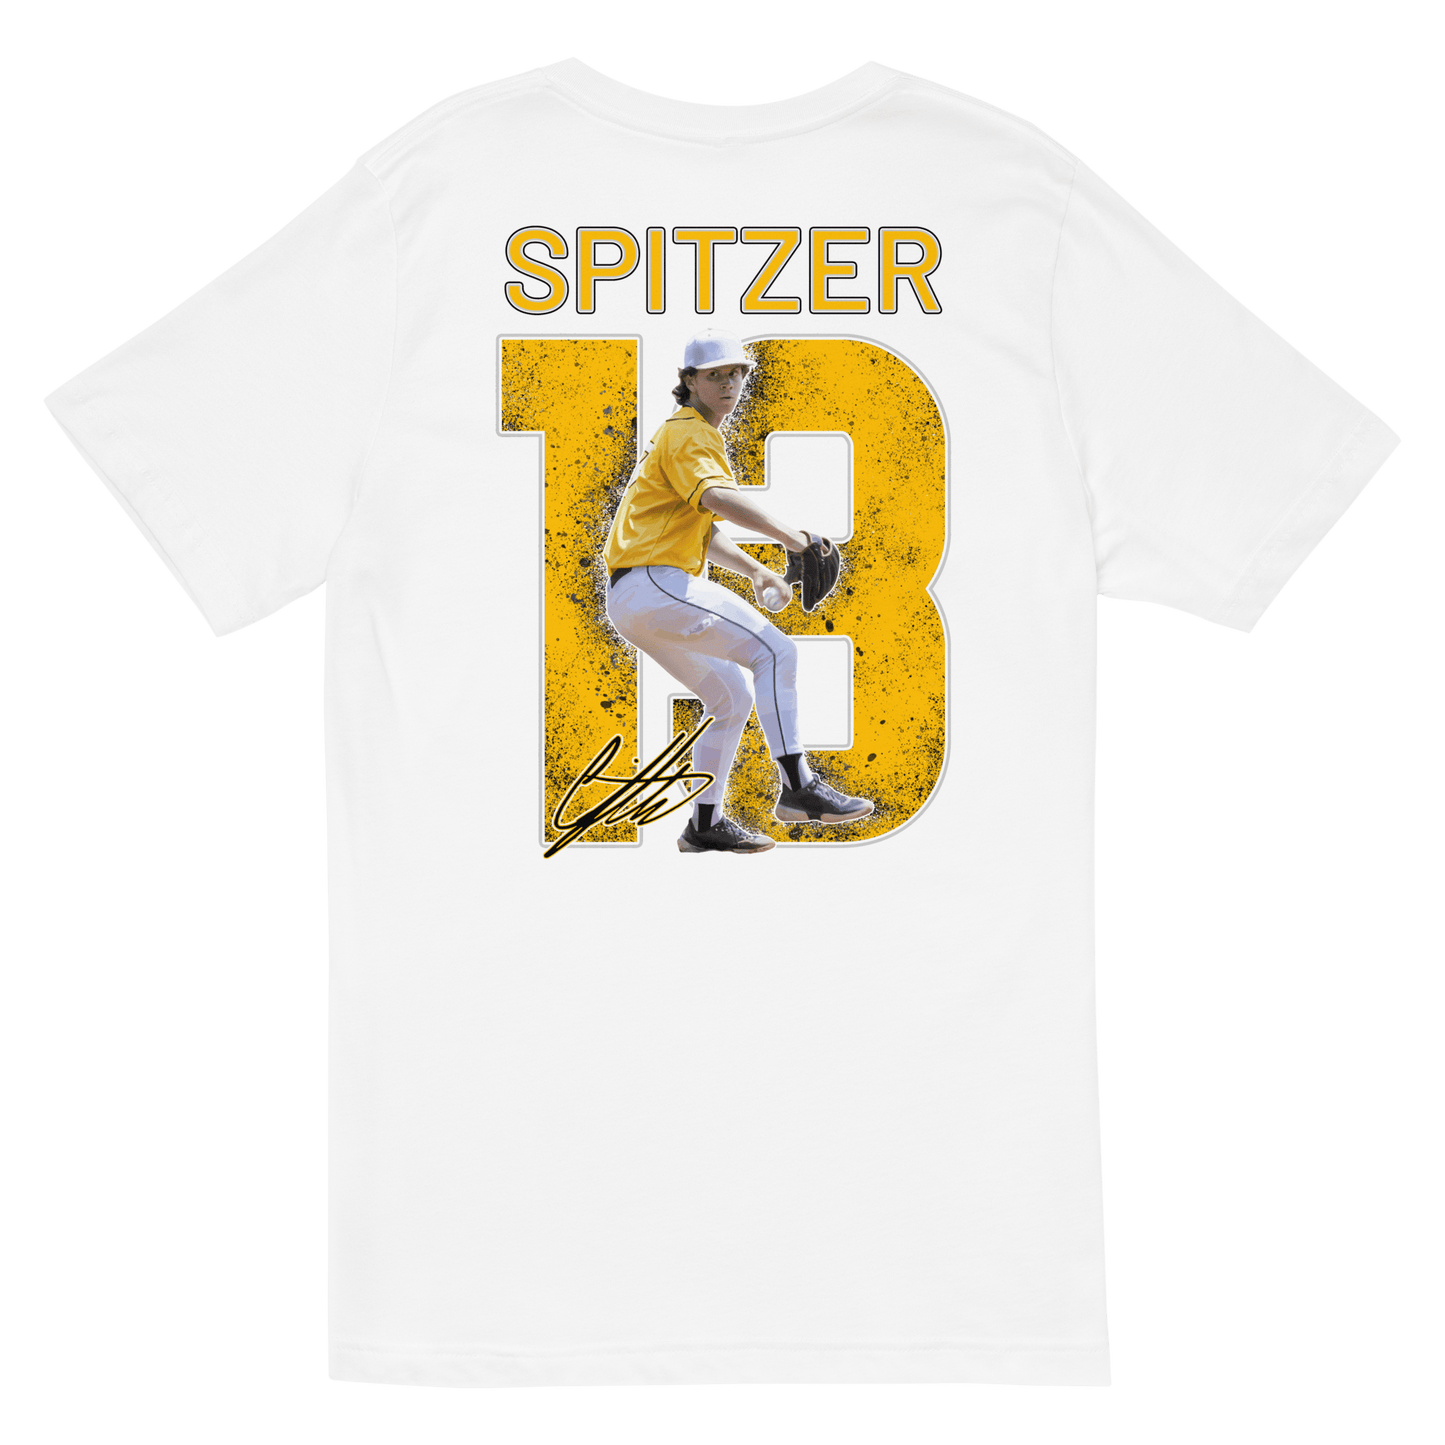 Cole Spitzer| Mural & Patch V-neck T-shirt - Clutch -